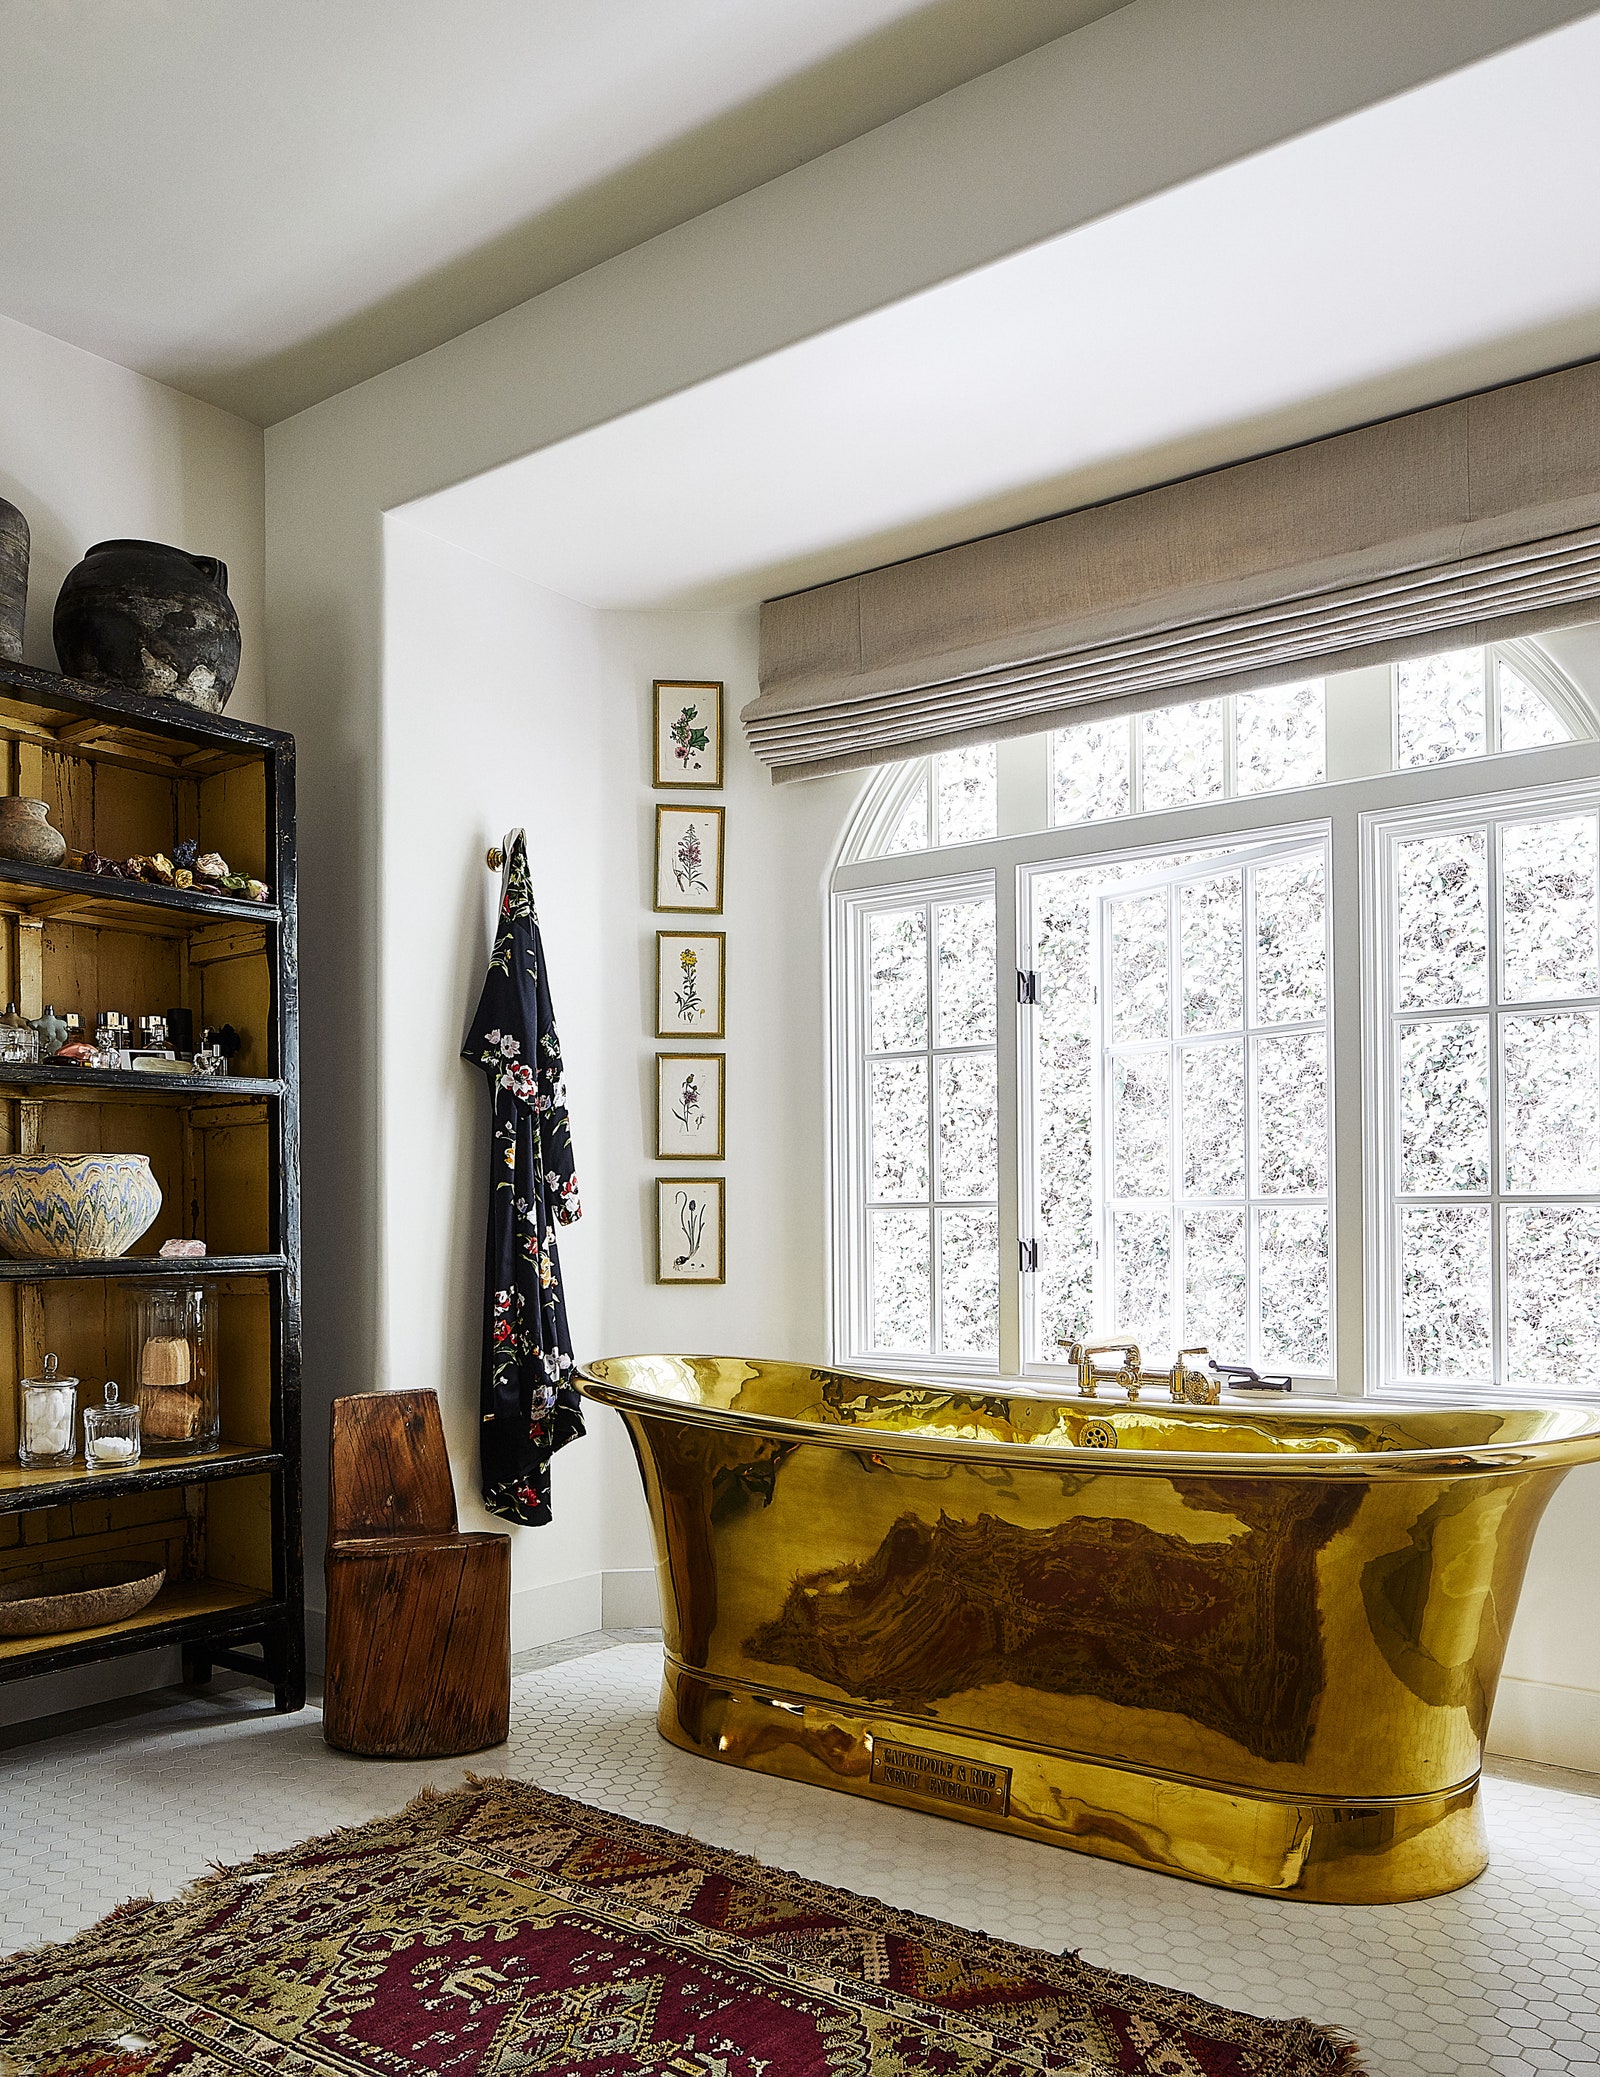 Bathroom Inspiration Decor - Inside The Best Celebrity Homes